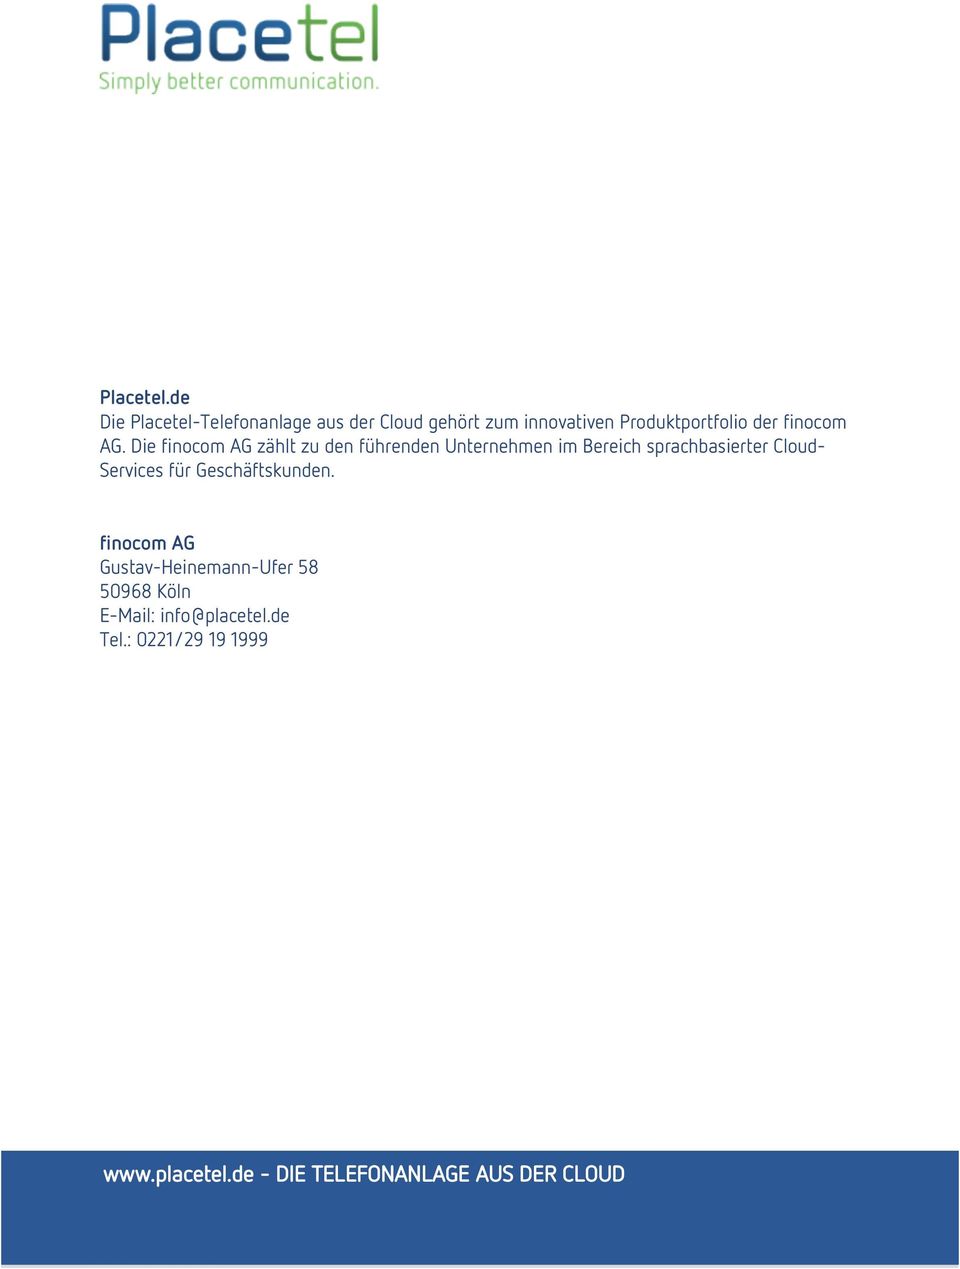 Geschäftskunden. finocom AG Gustav-Heinemann-Ufer 58 50968 Köln E-Mail: info@placetel.de Tel.